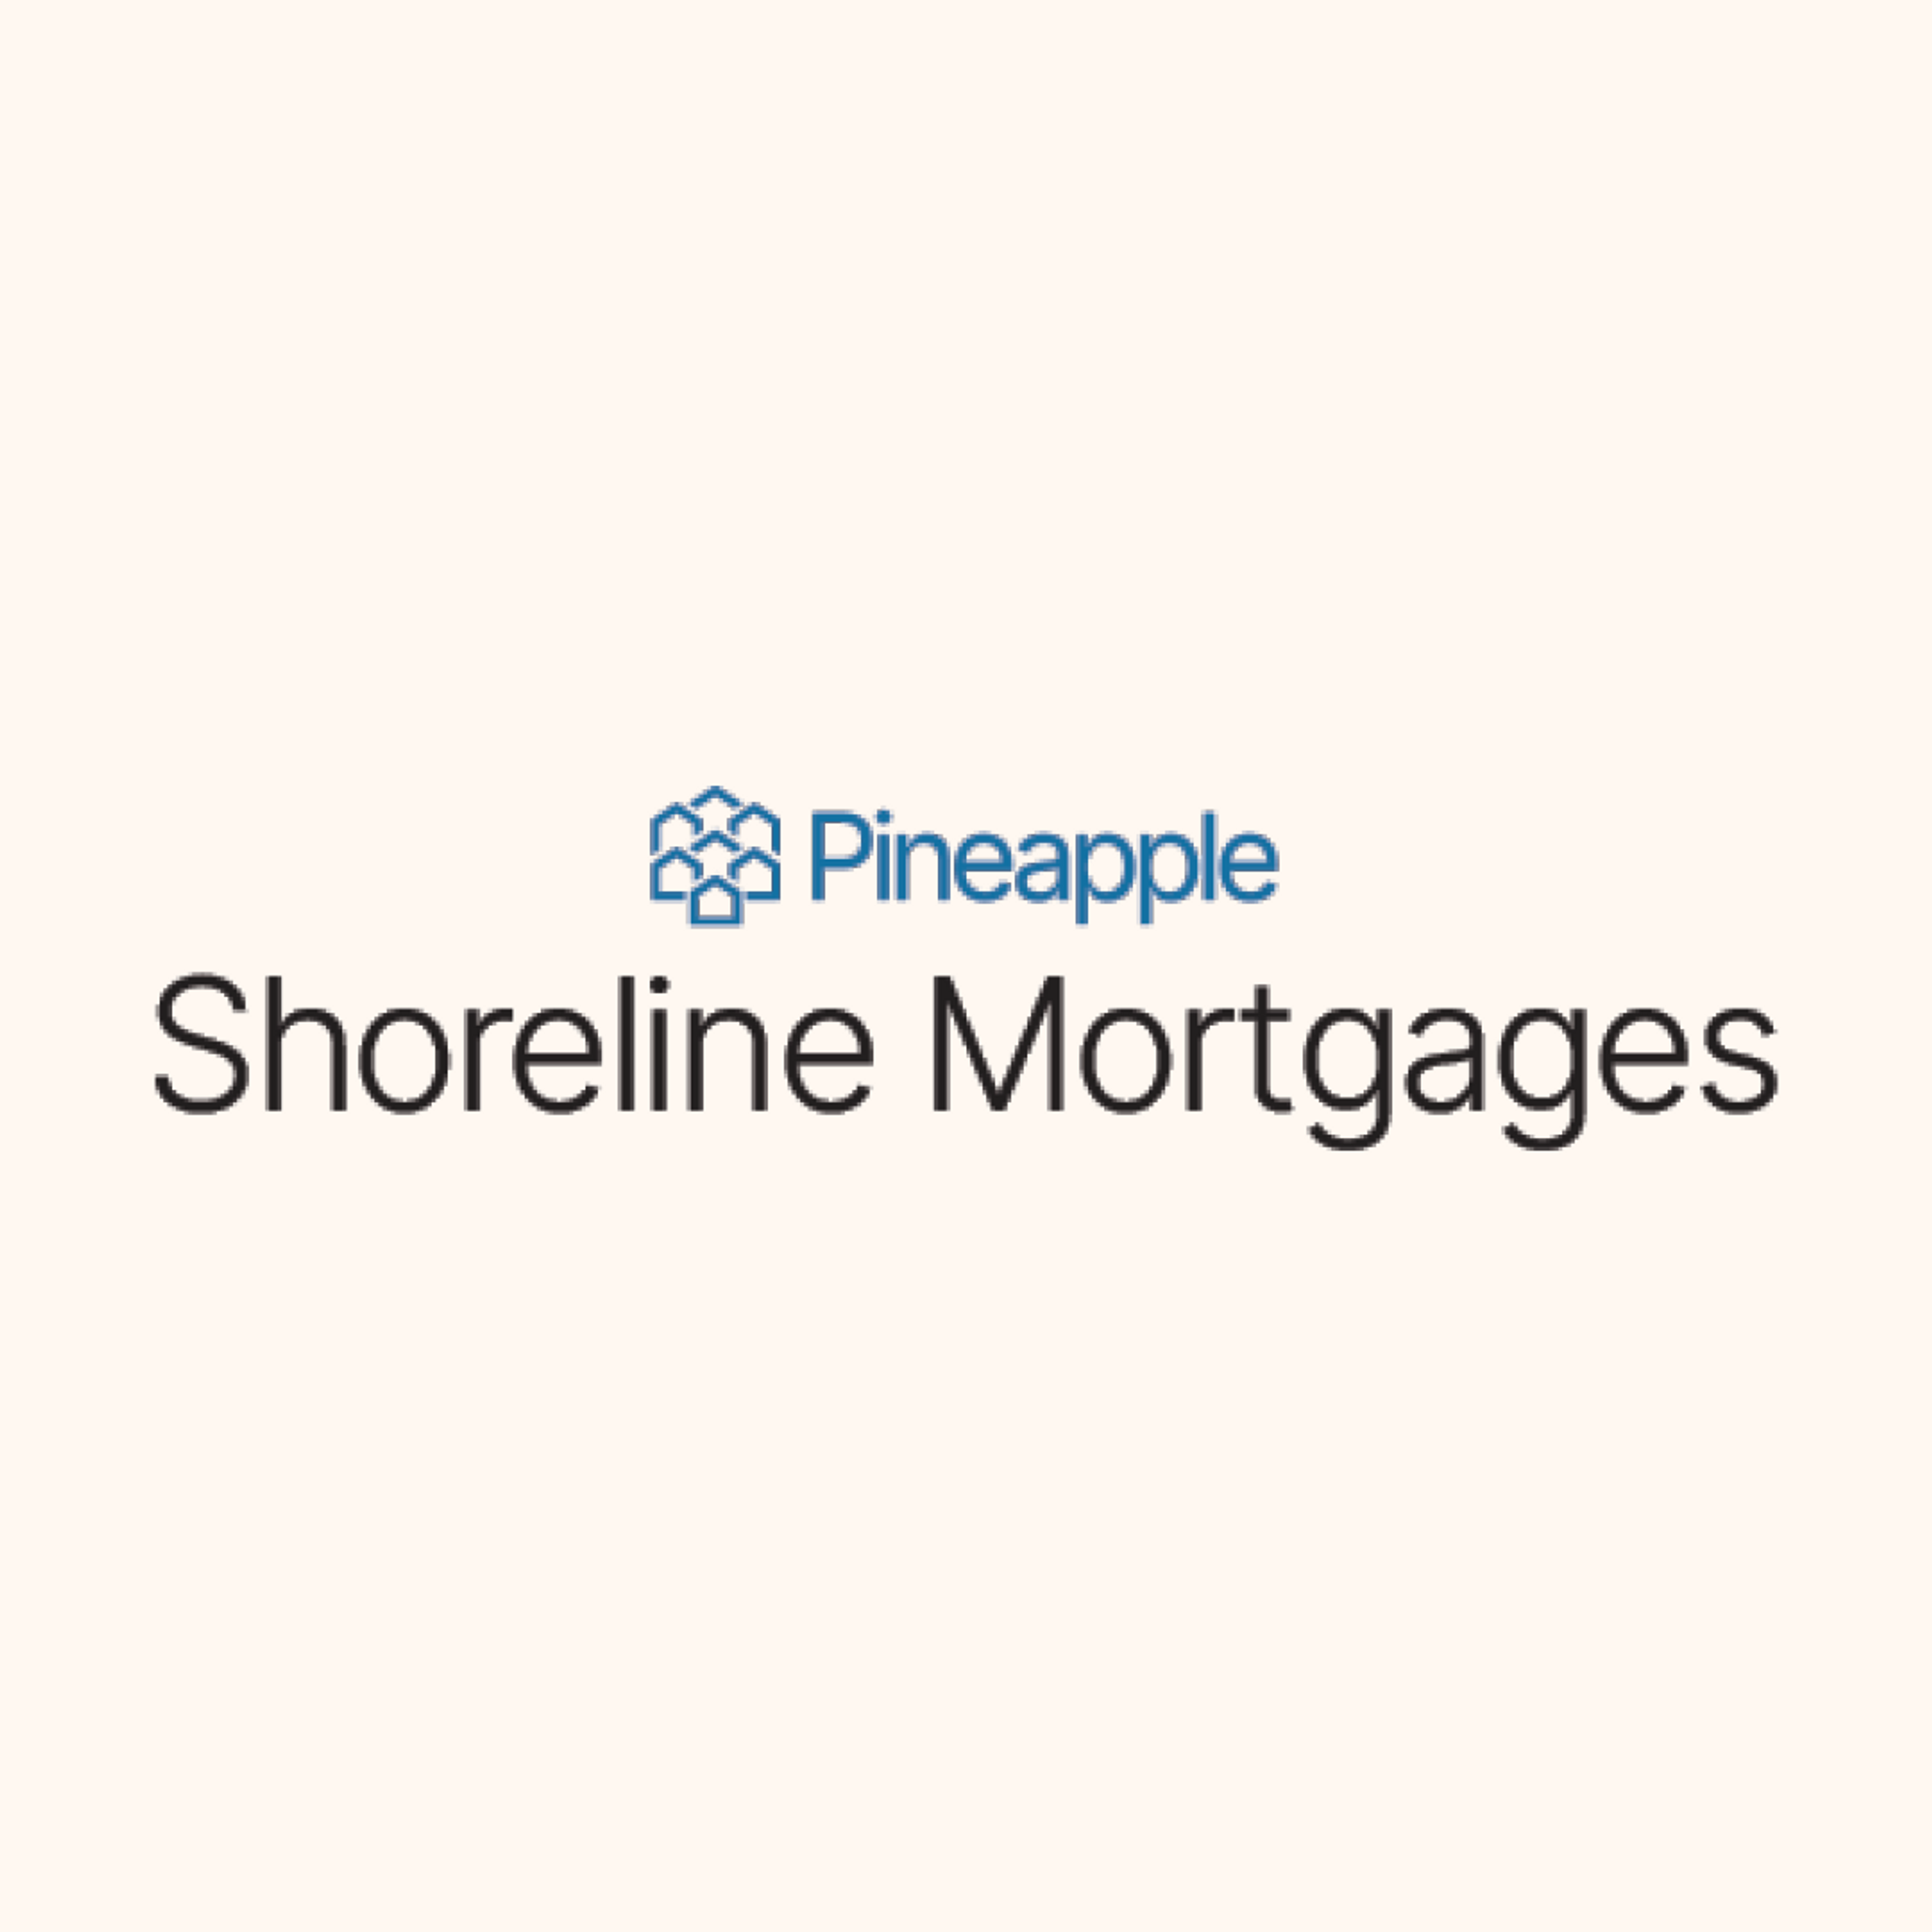 Shoreline Mortgages